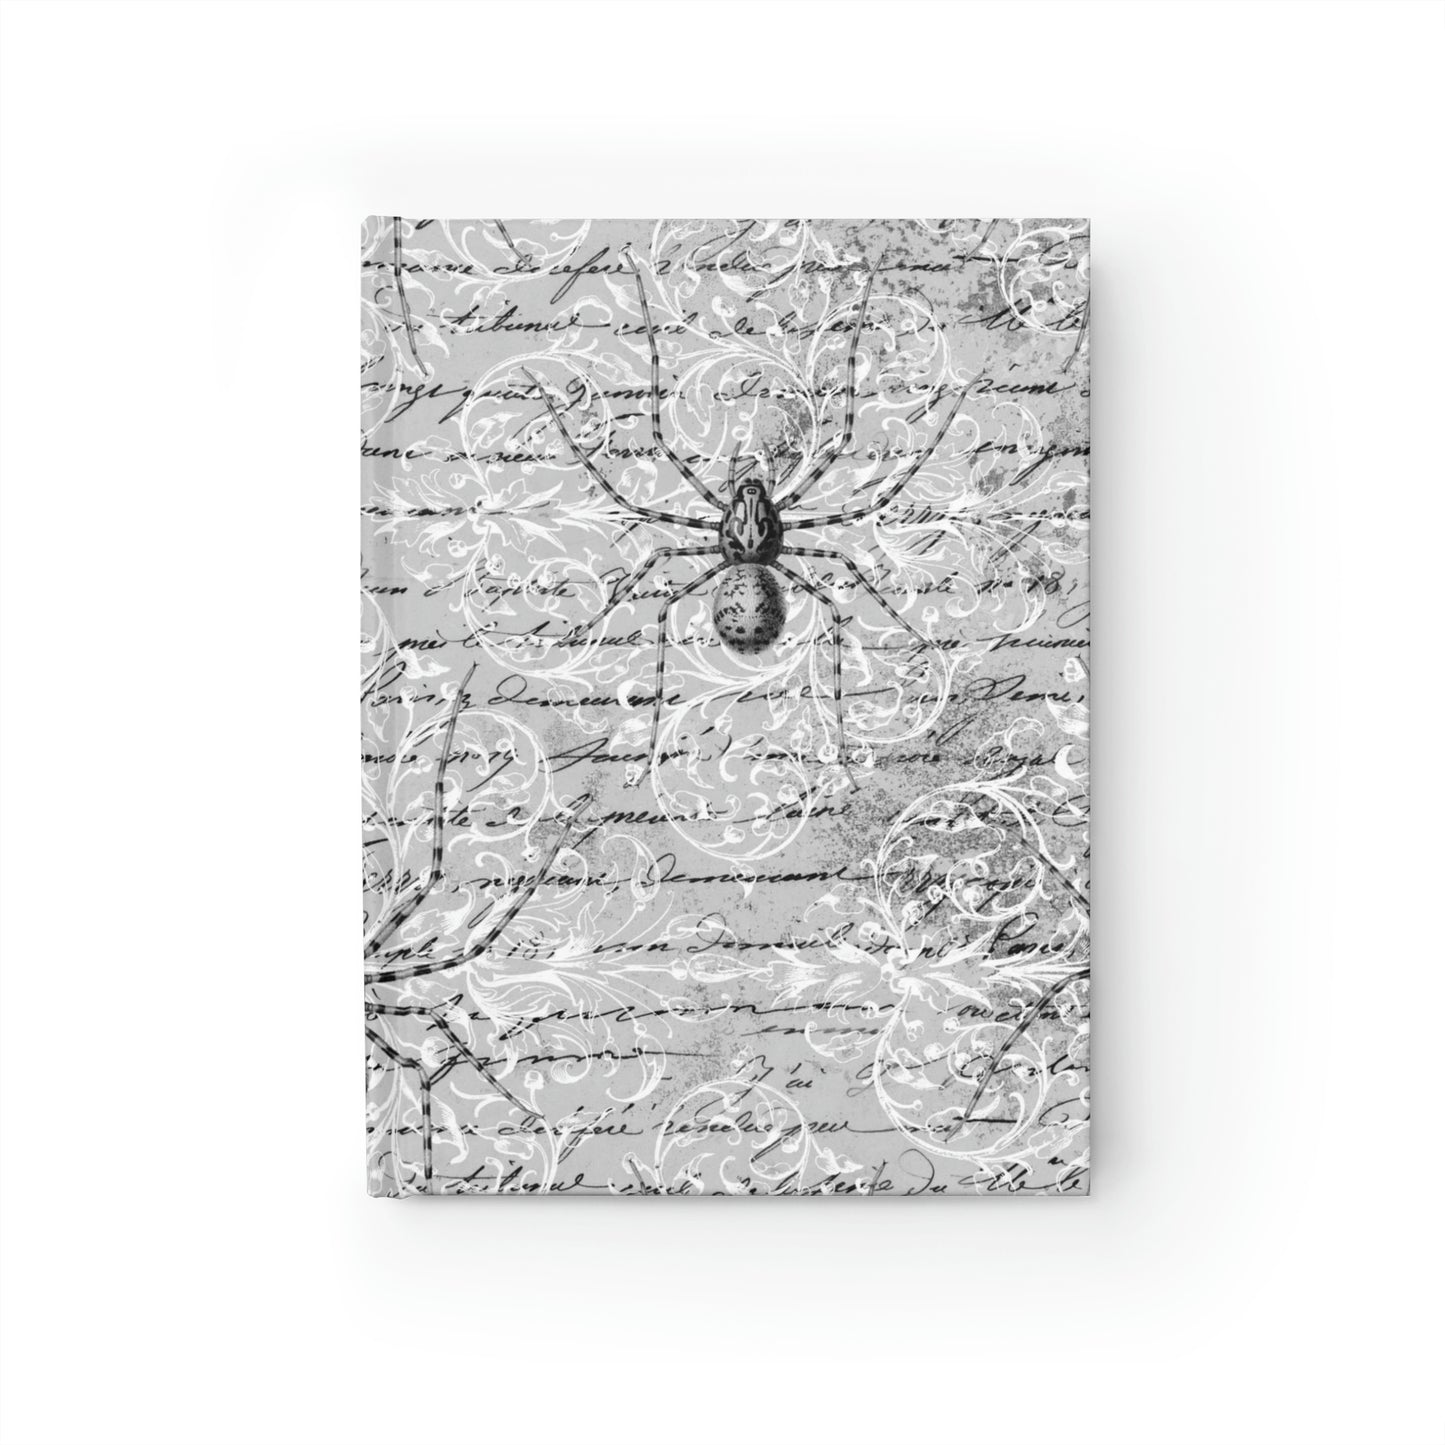 Spider Journal - Ruled Line